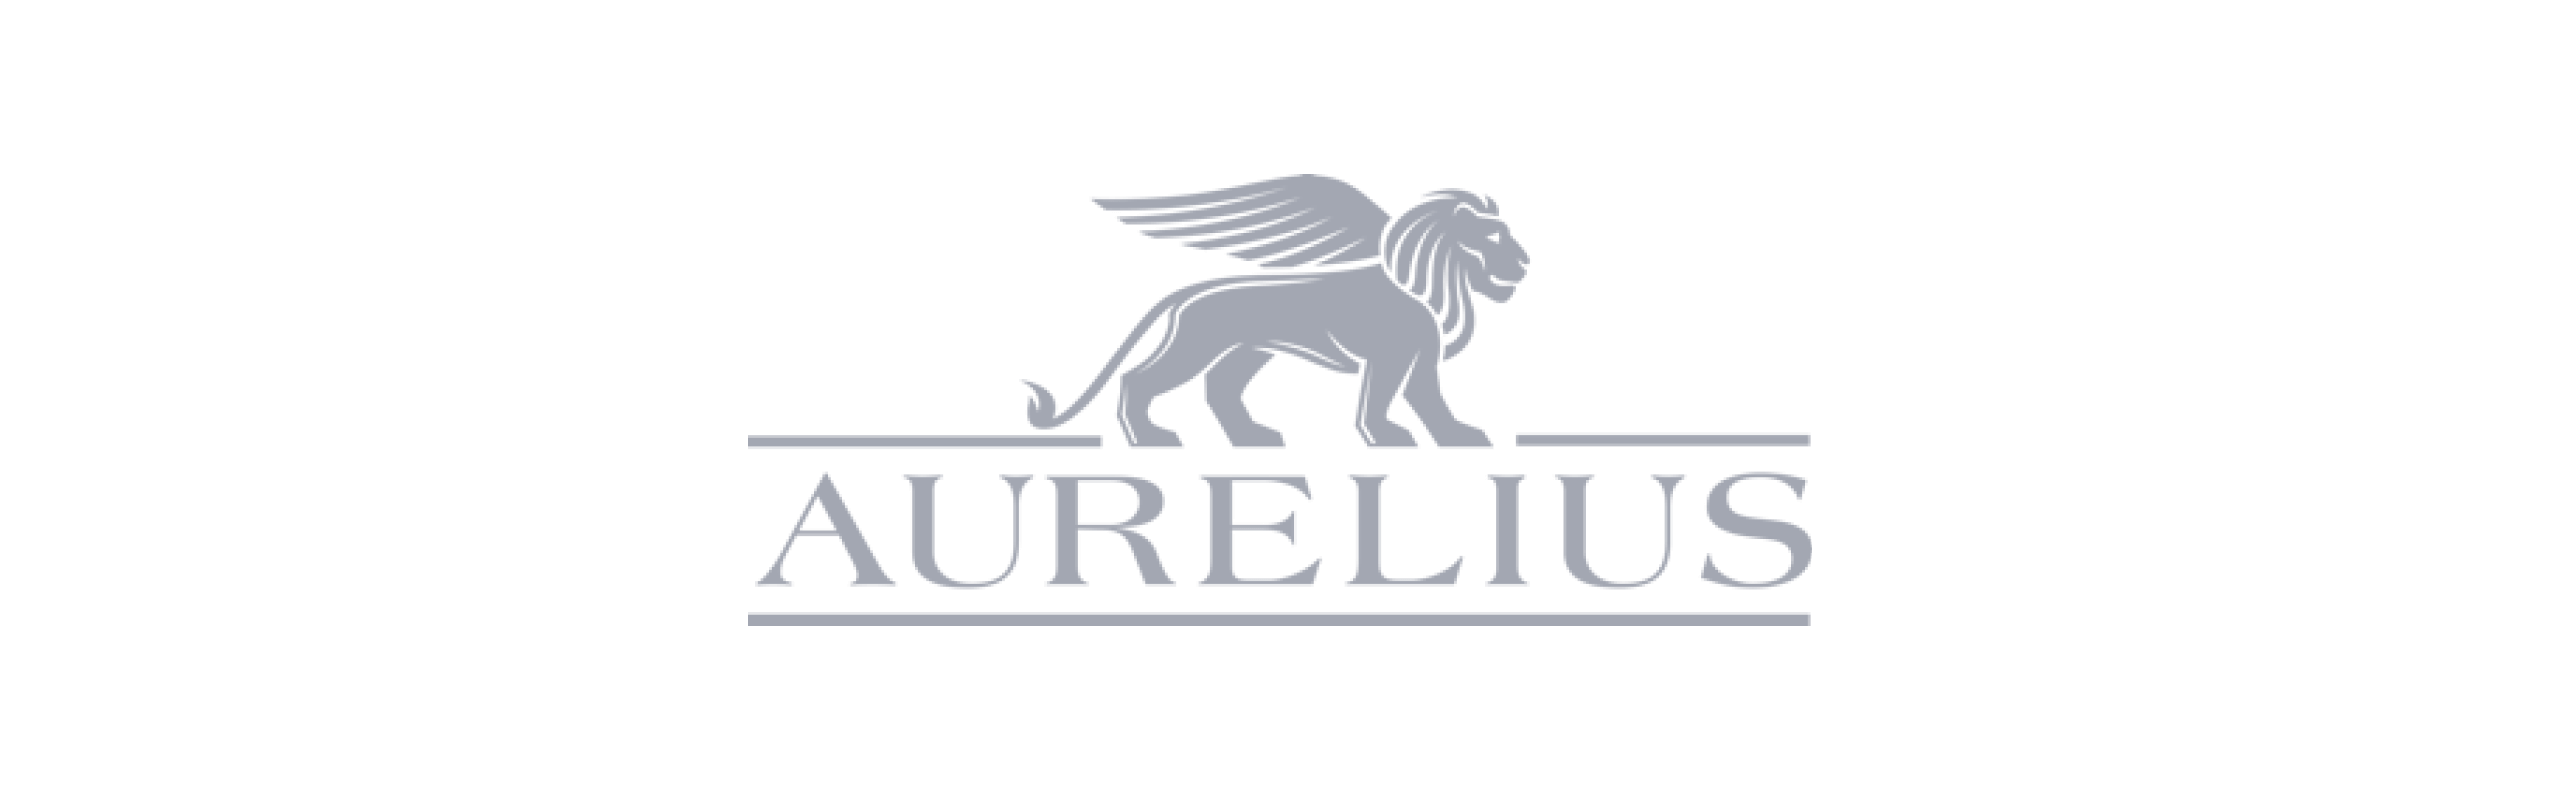 Technology & product due diligence | Code & Co. advises AURELIUS WACHSTUMSKAPITAL (logo shown)